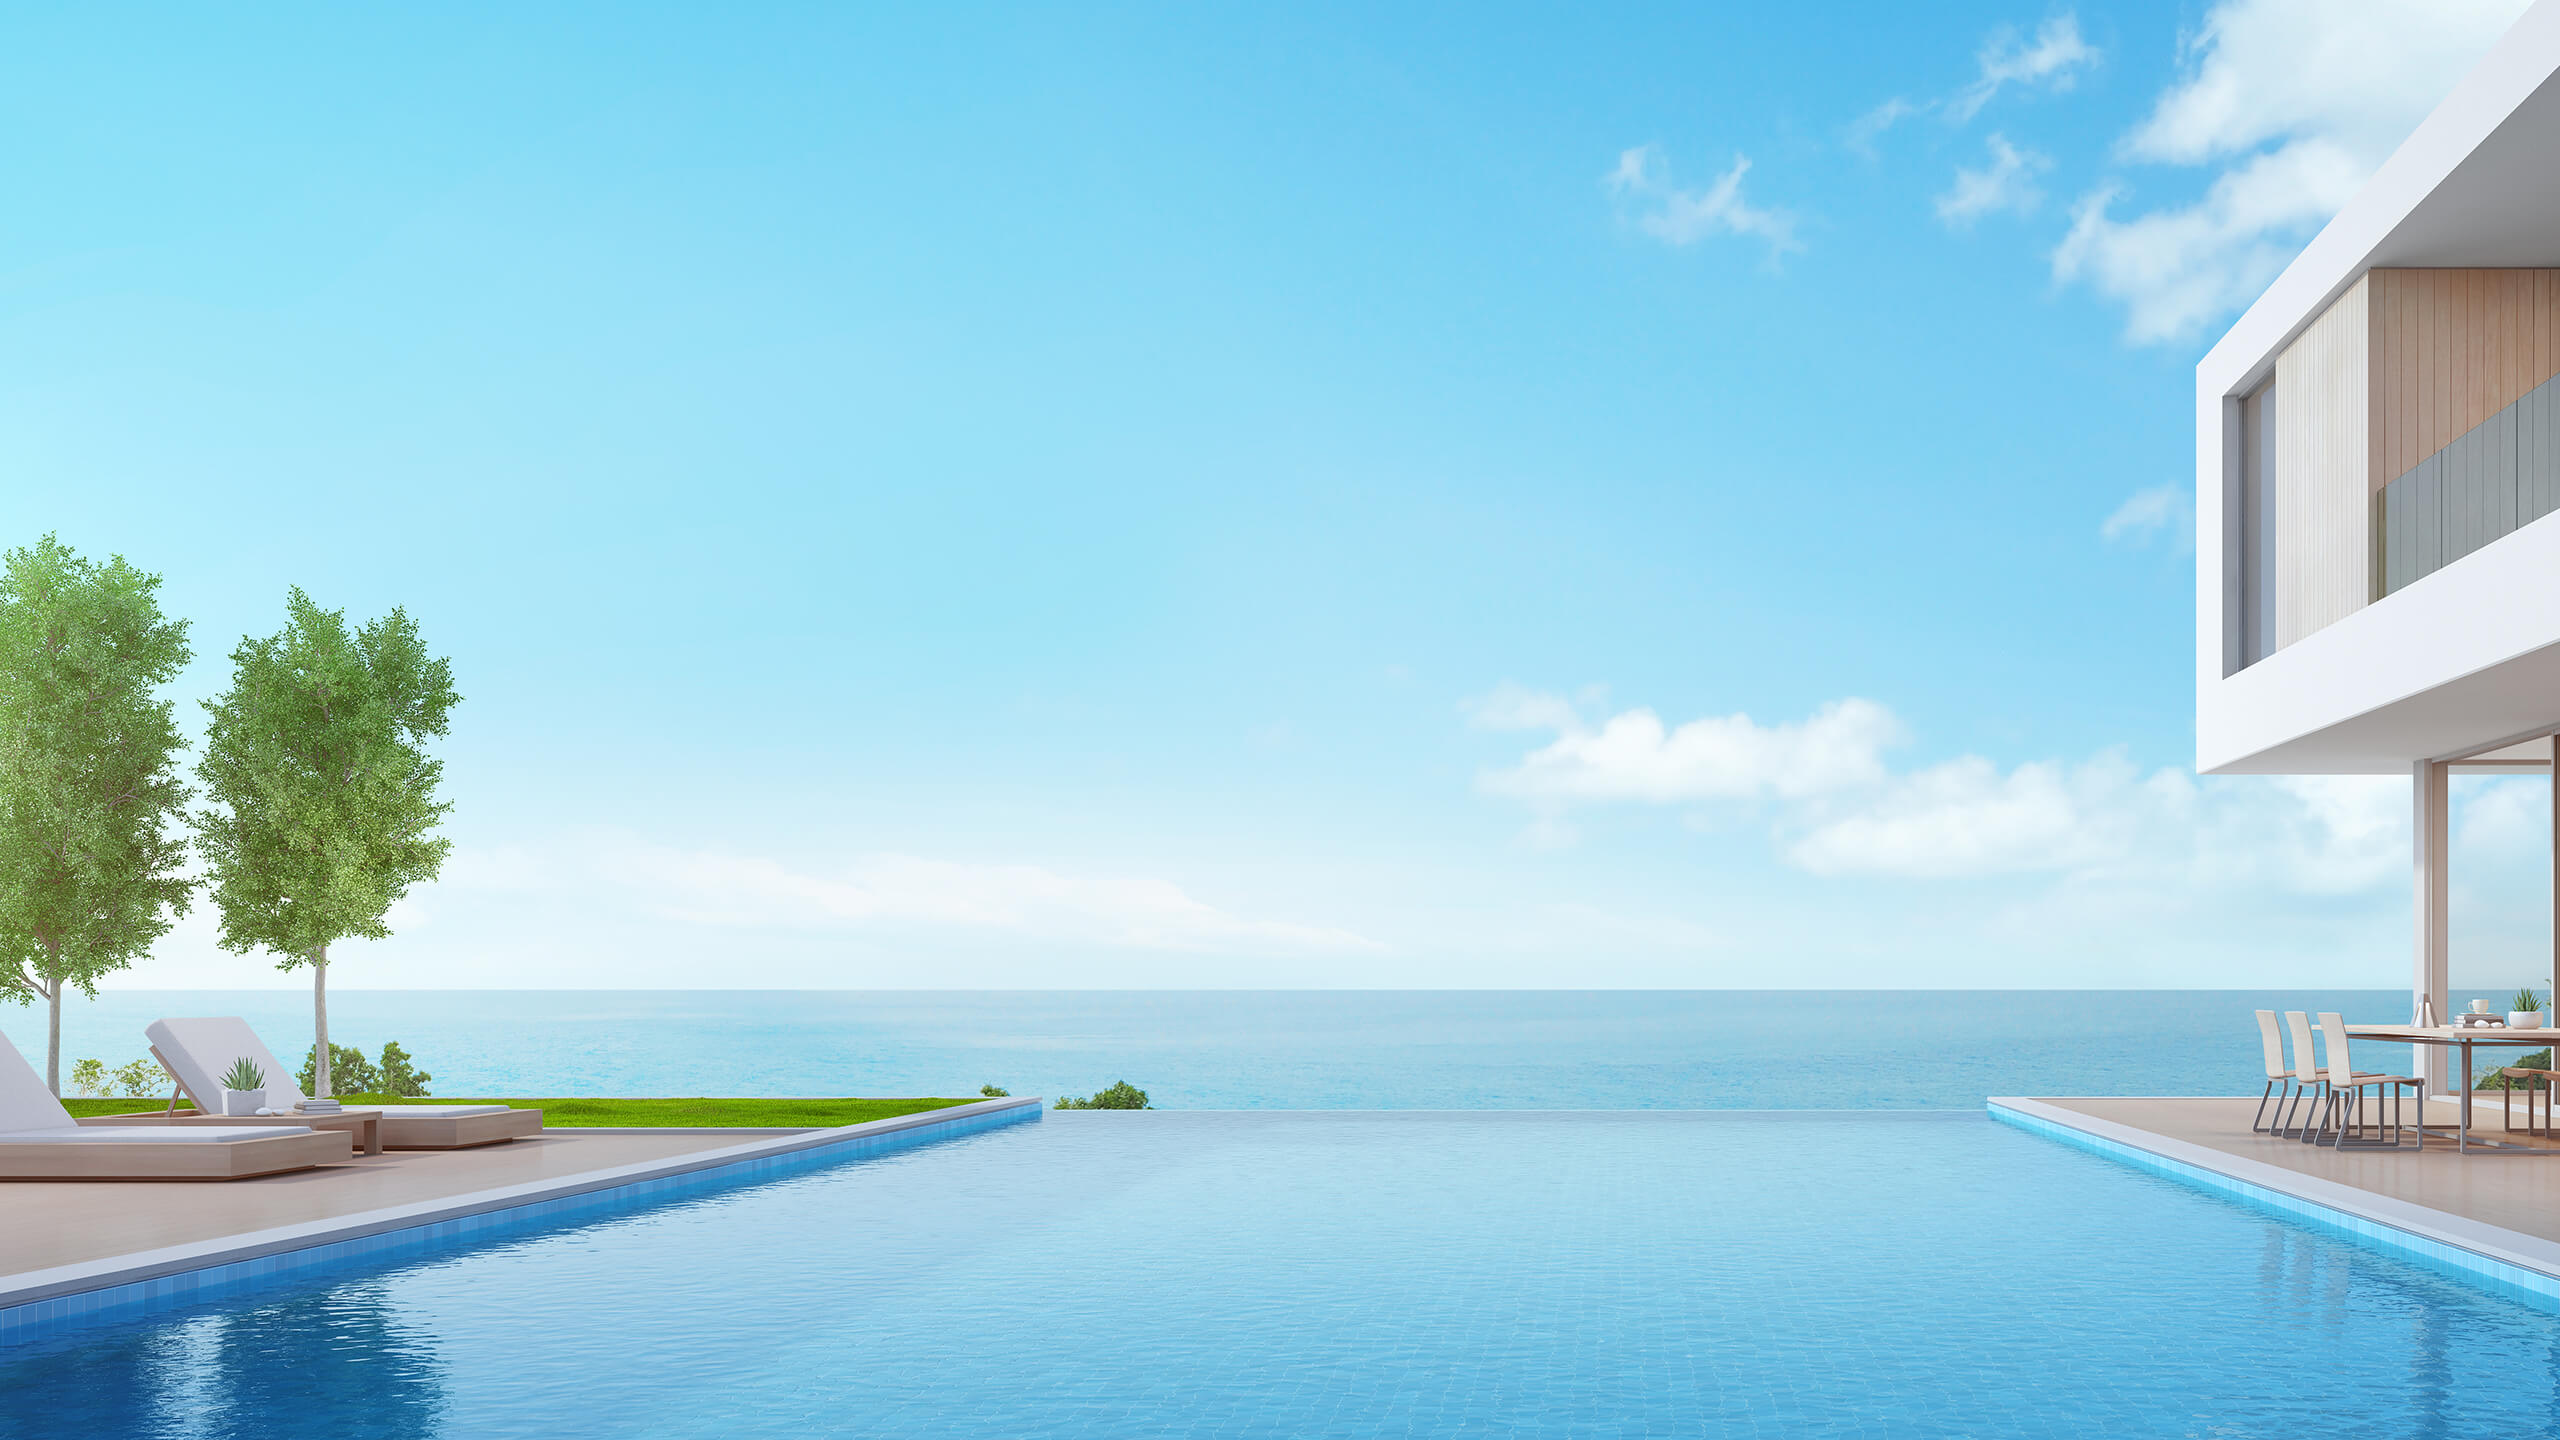 Coastal Capital Header Image. Infinity pool of a luxury modern house overlooking the blue ocean.